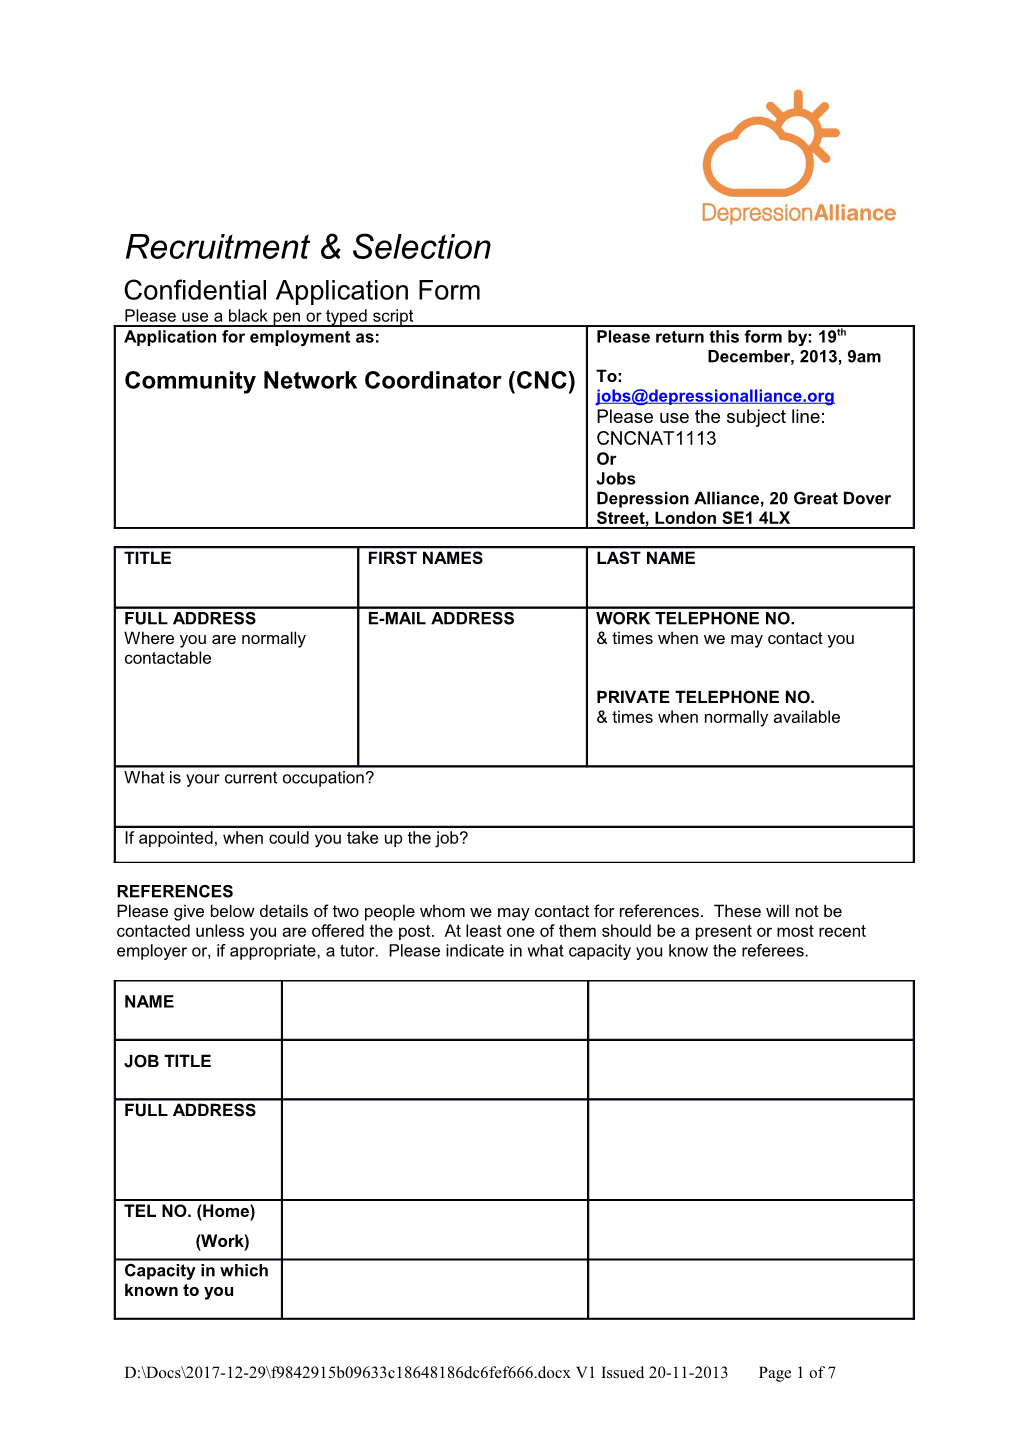 Recruitment & Selection s1